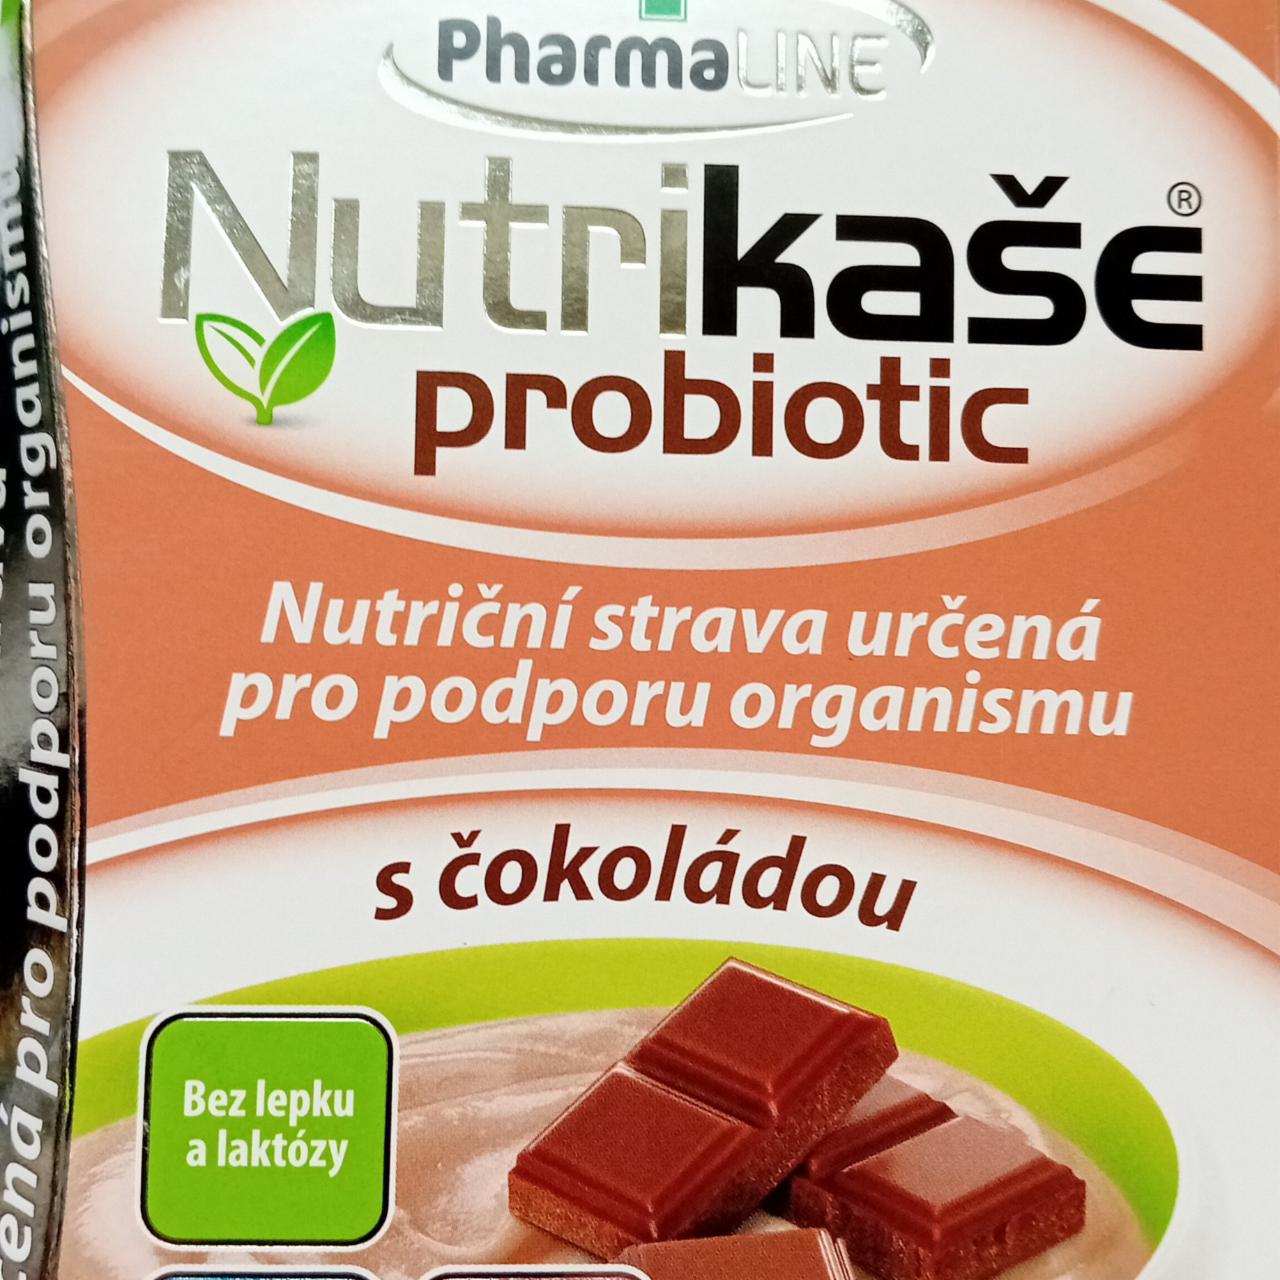 Fotografie - Nutrikaše probiotic s čokoládou PharmaLine